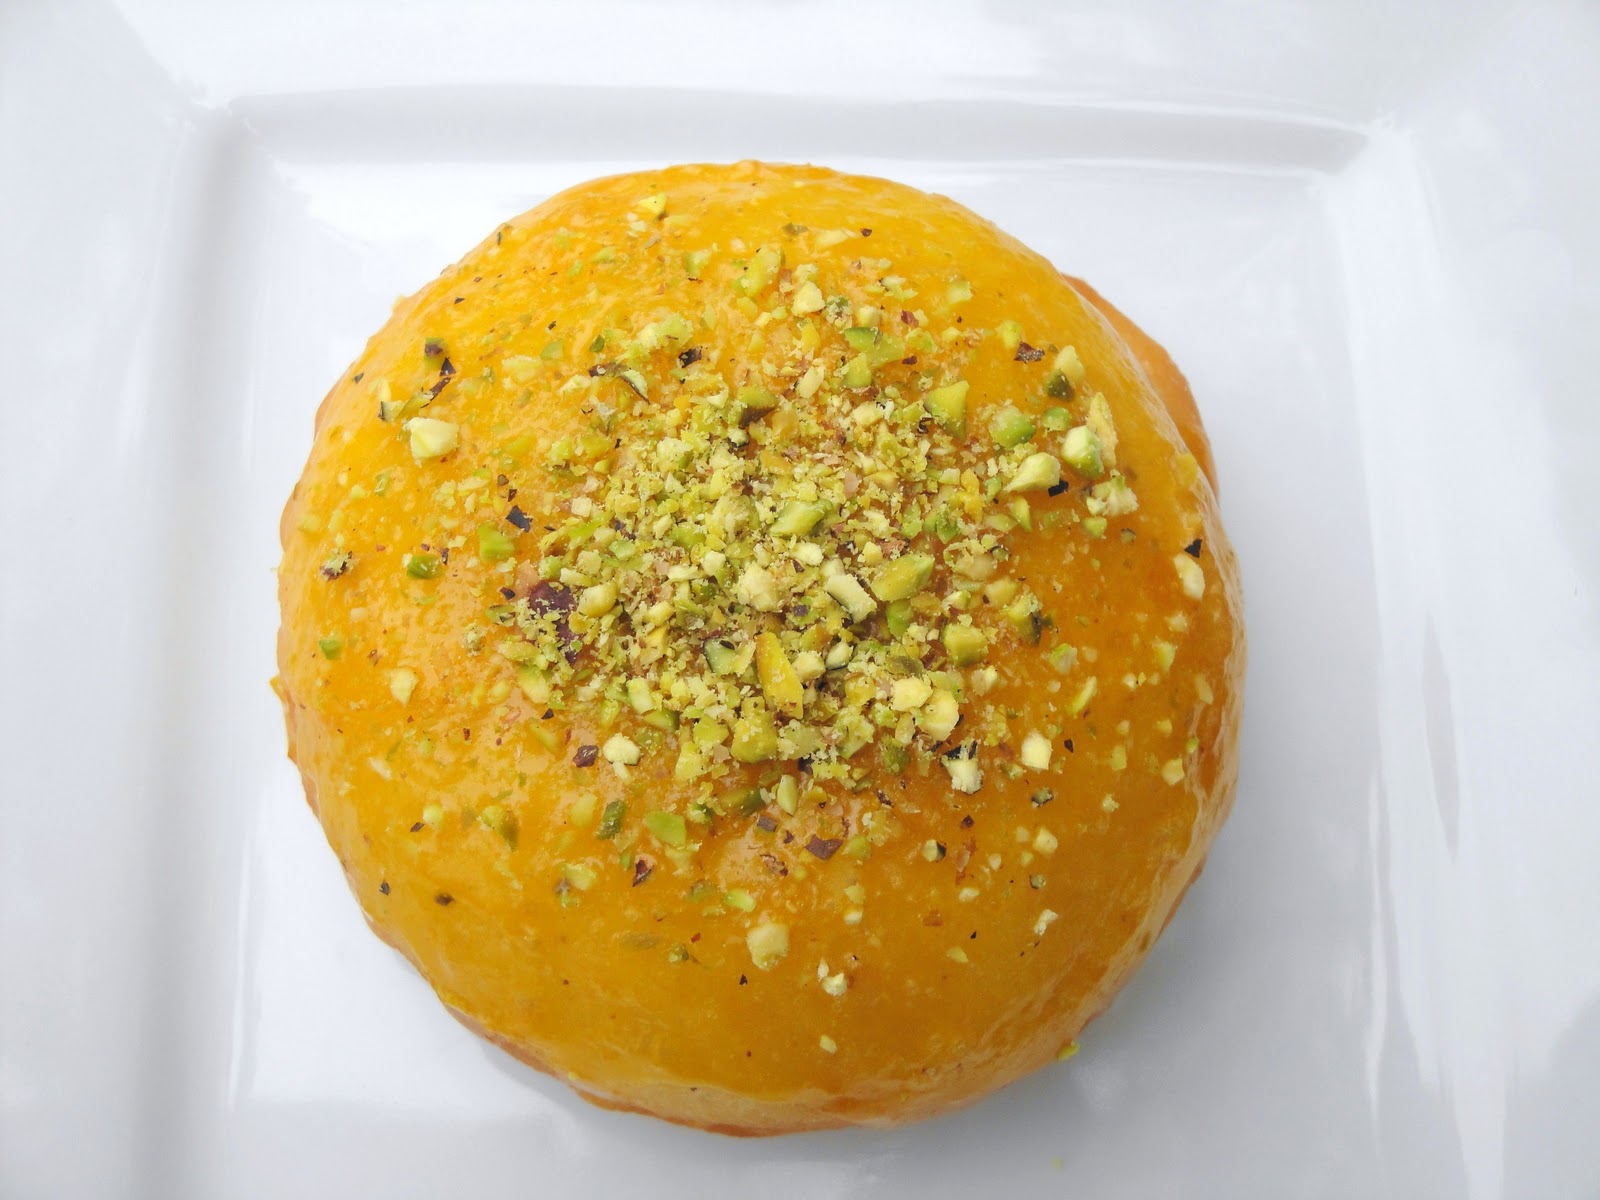 Mango Pistachio Doughnuts - adapted from Alton Brown's recipe